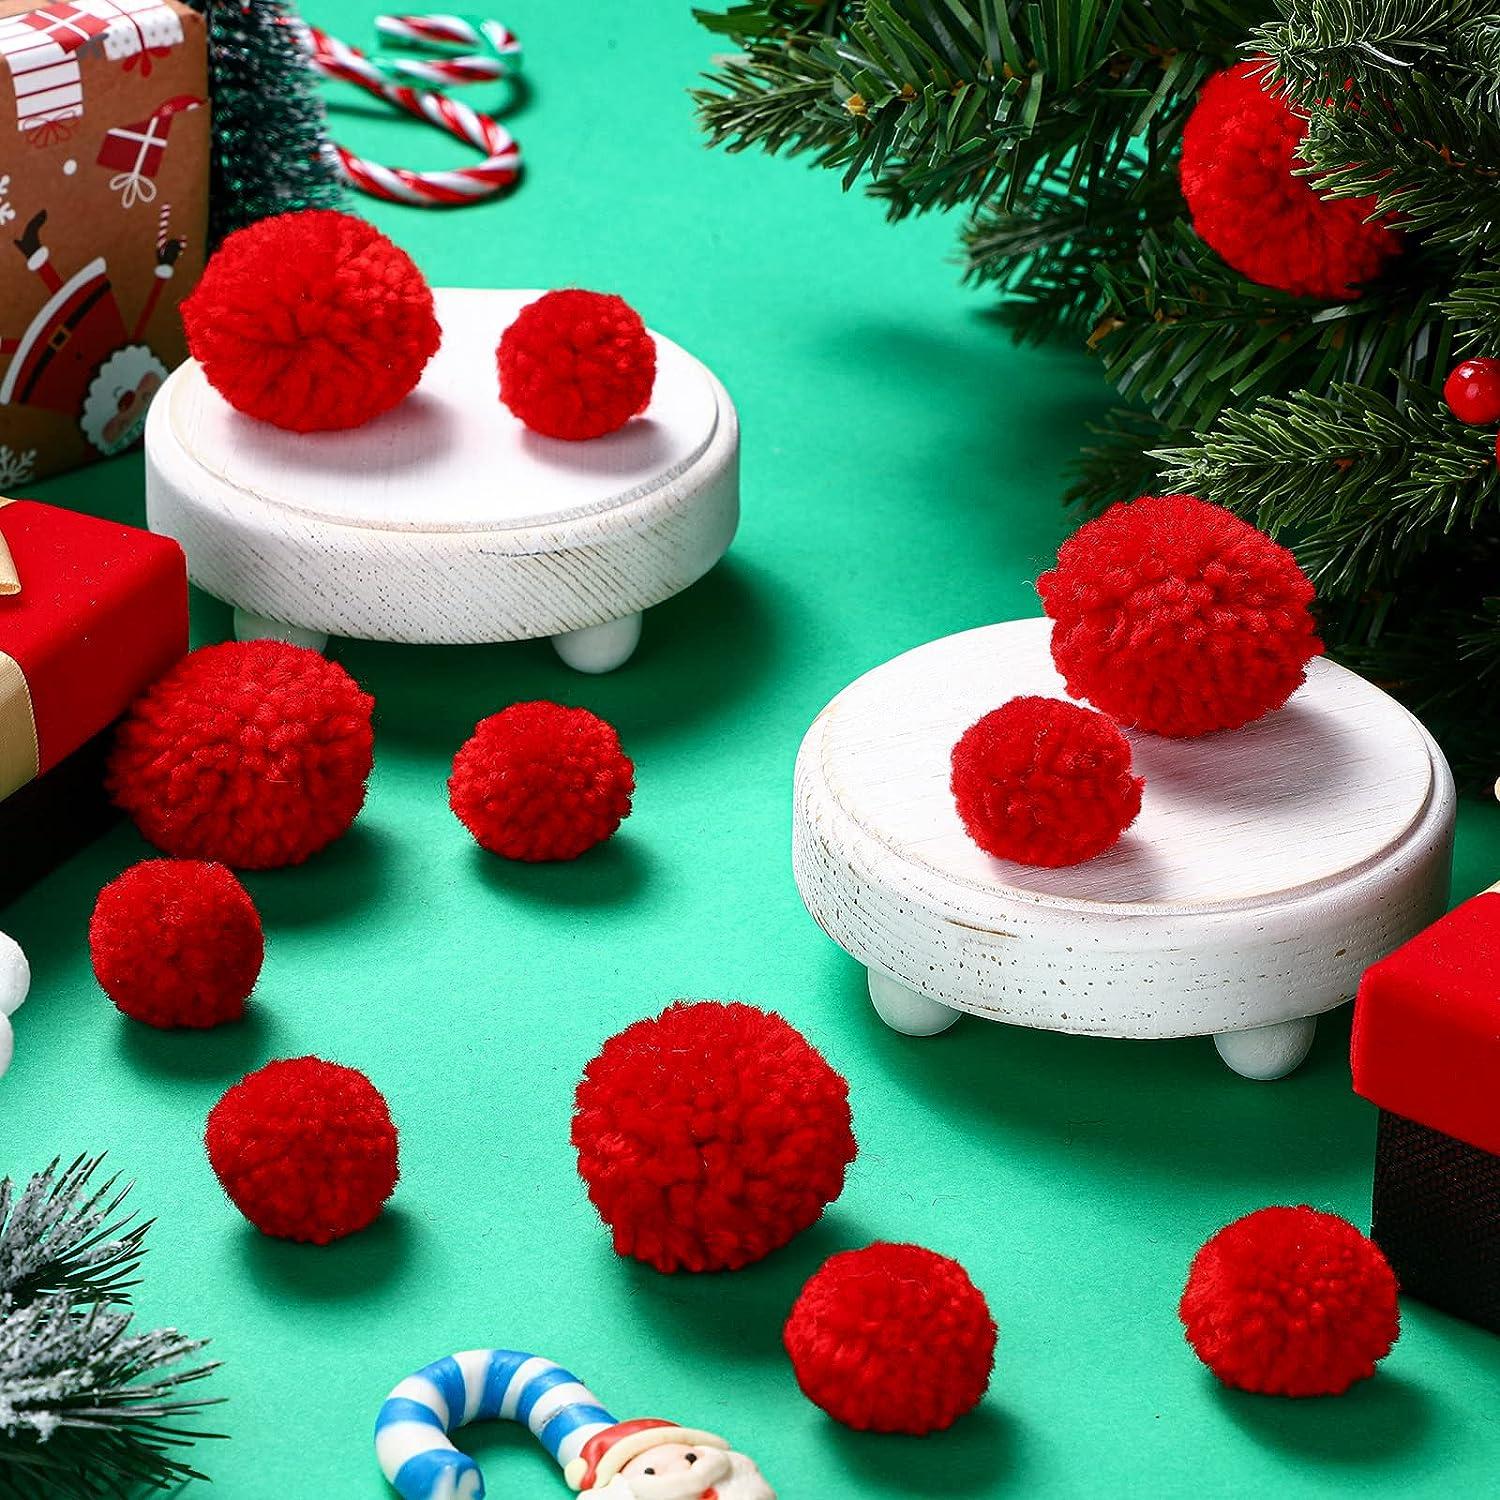 300pcs 10mm Red Fluffy Soft Pom Pom, Yarn Pom Pom Balls, Pompoms Fluffy  Balls for Home Garlands, Party Decoration, Hair Accessory 